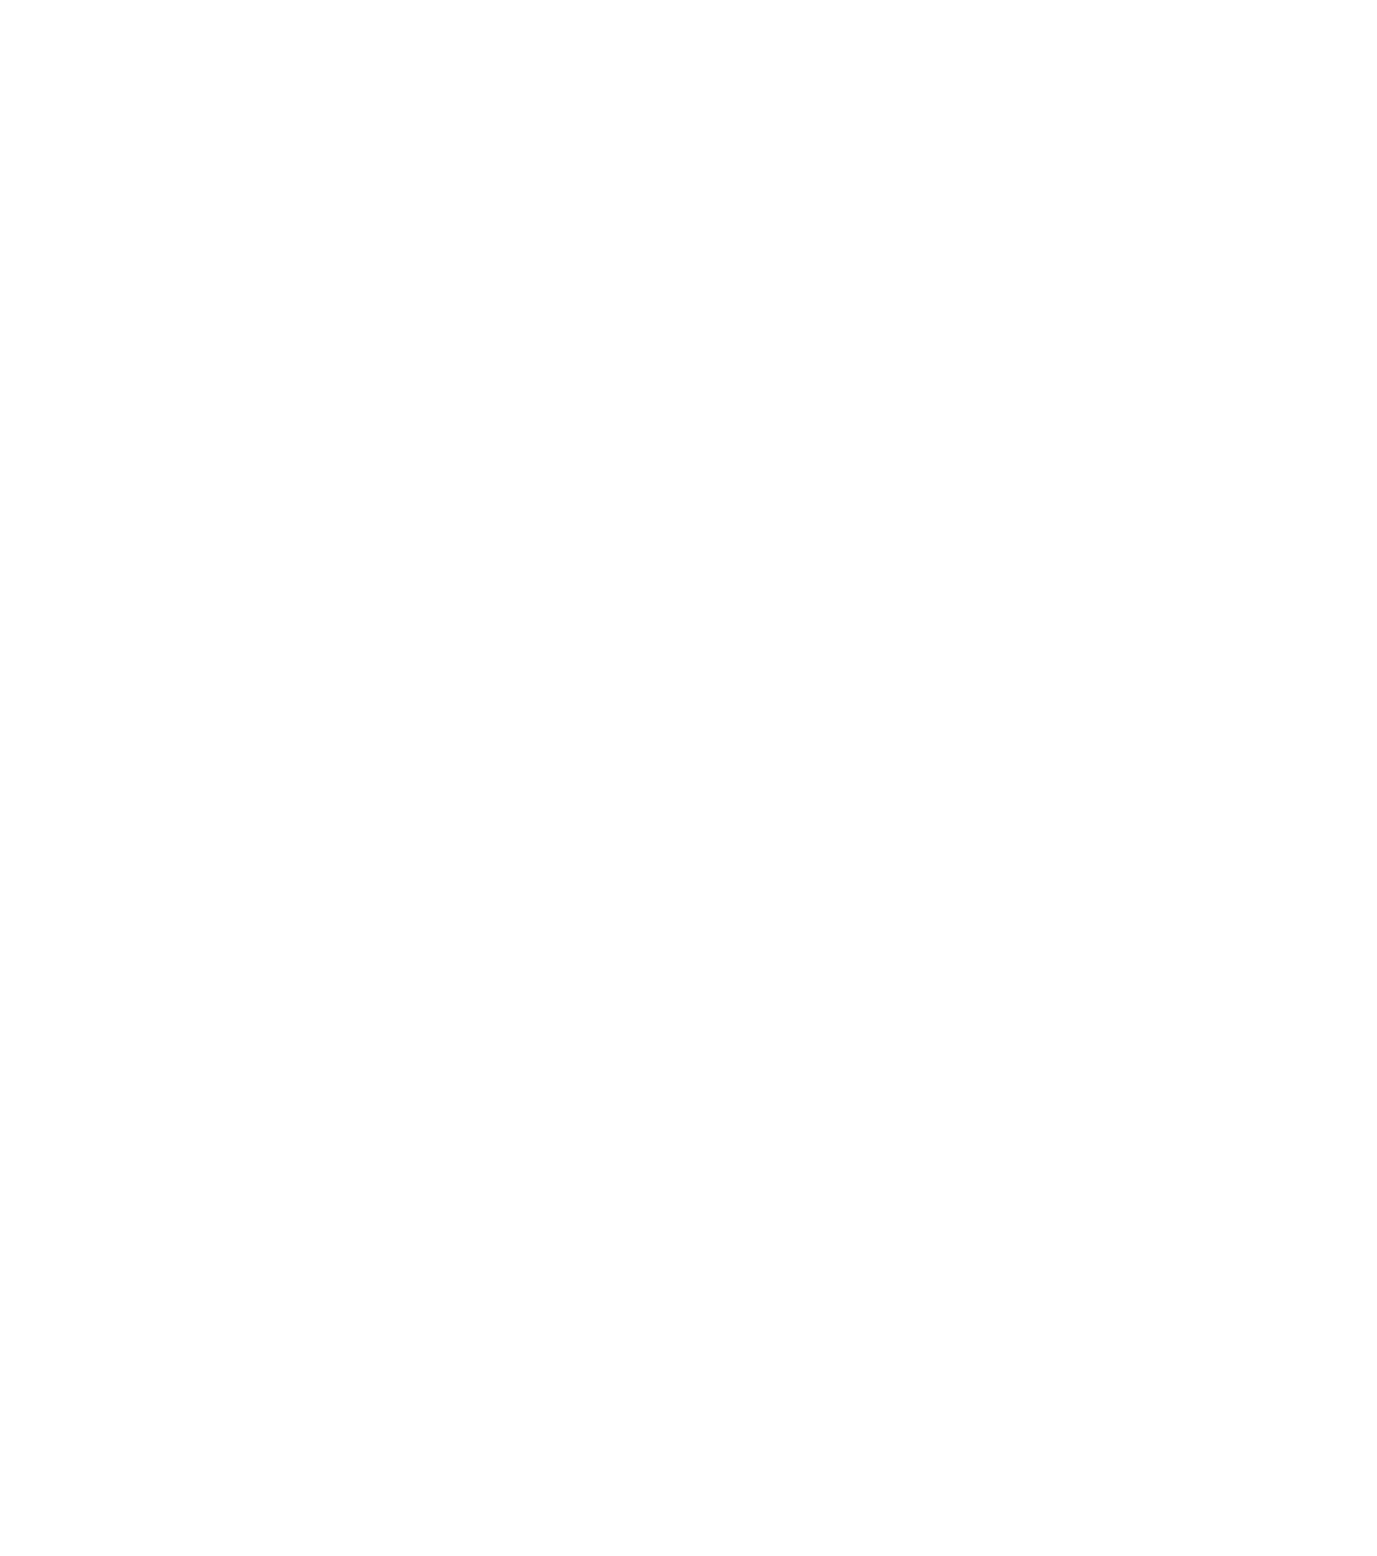 BigBear.ai logo for dark backgrounds (transparent PNG)